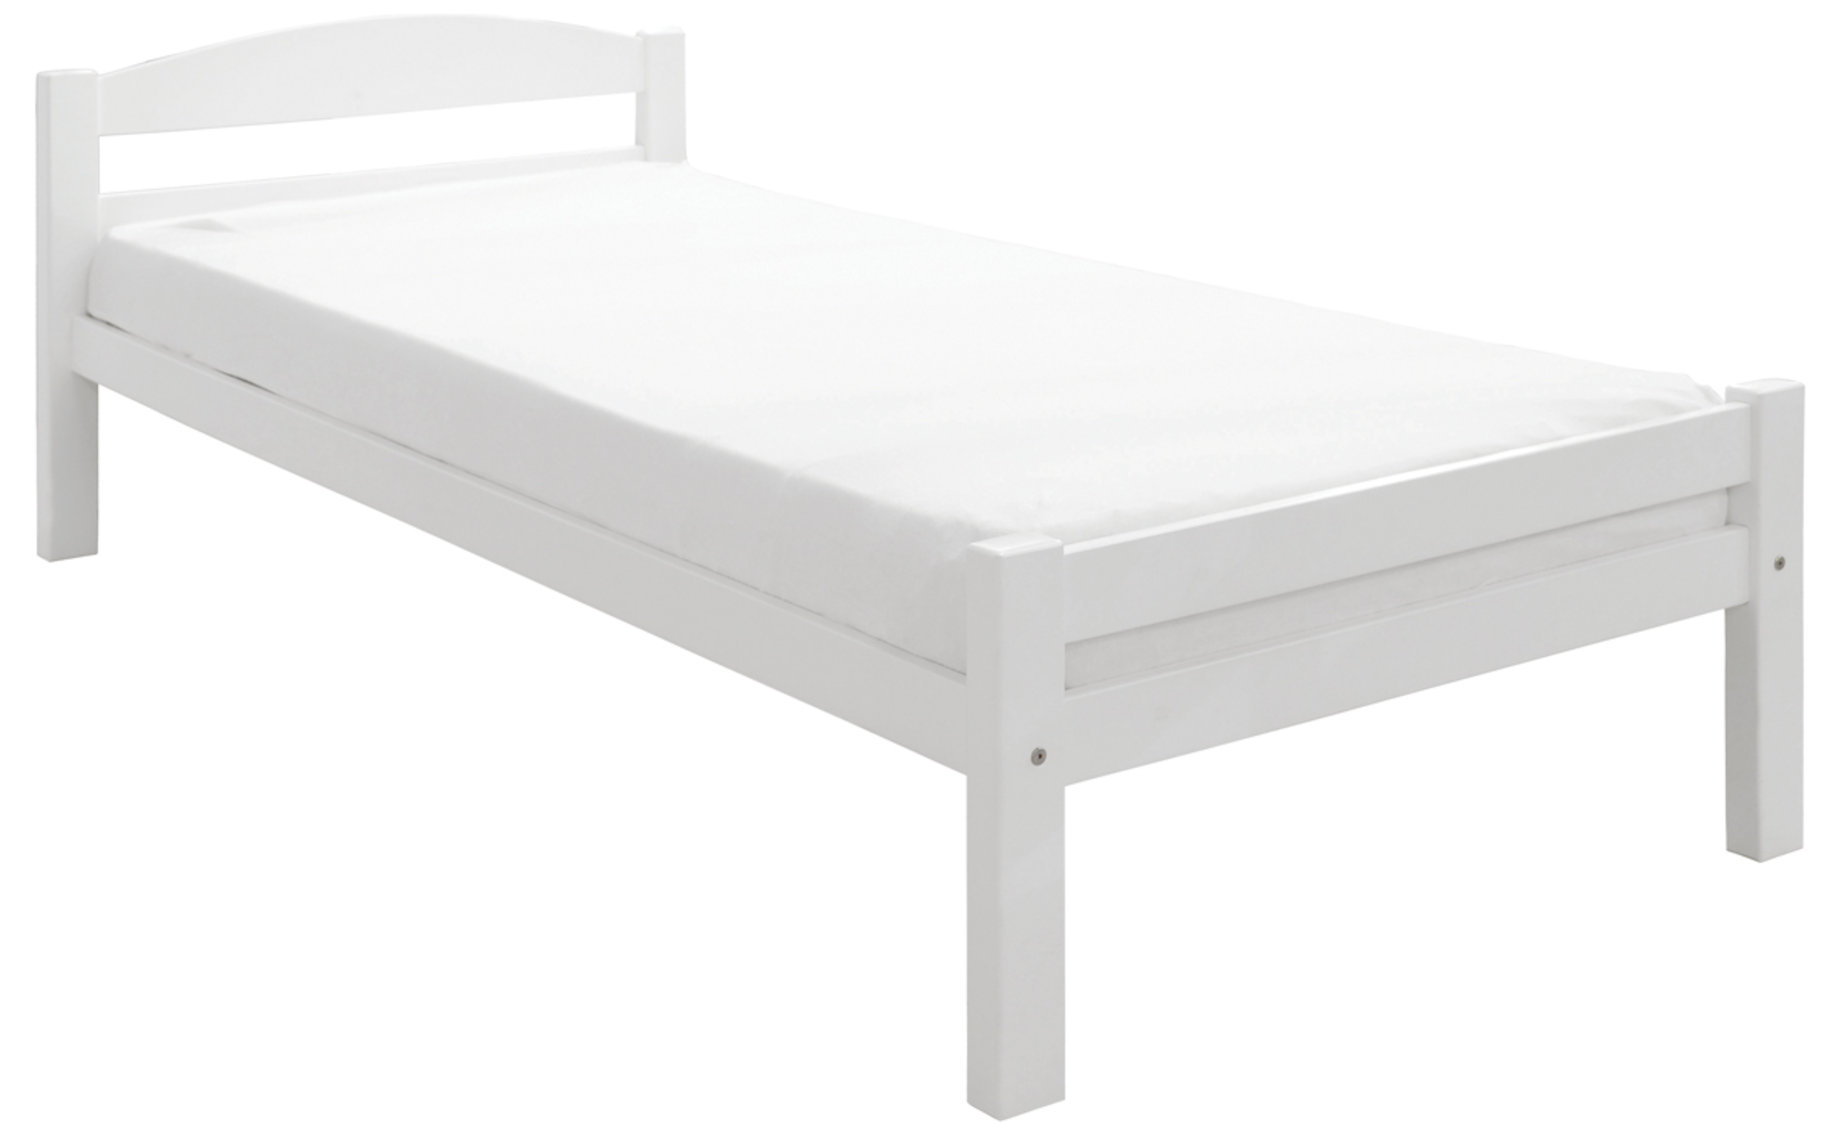 Lux krevet sa podnicom 100x205,7x70/48 cm